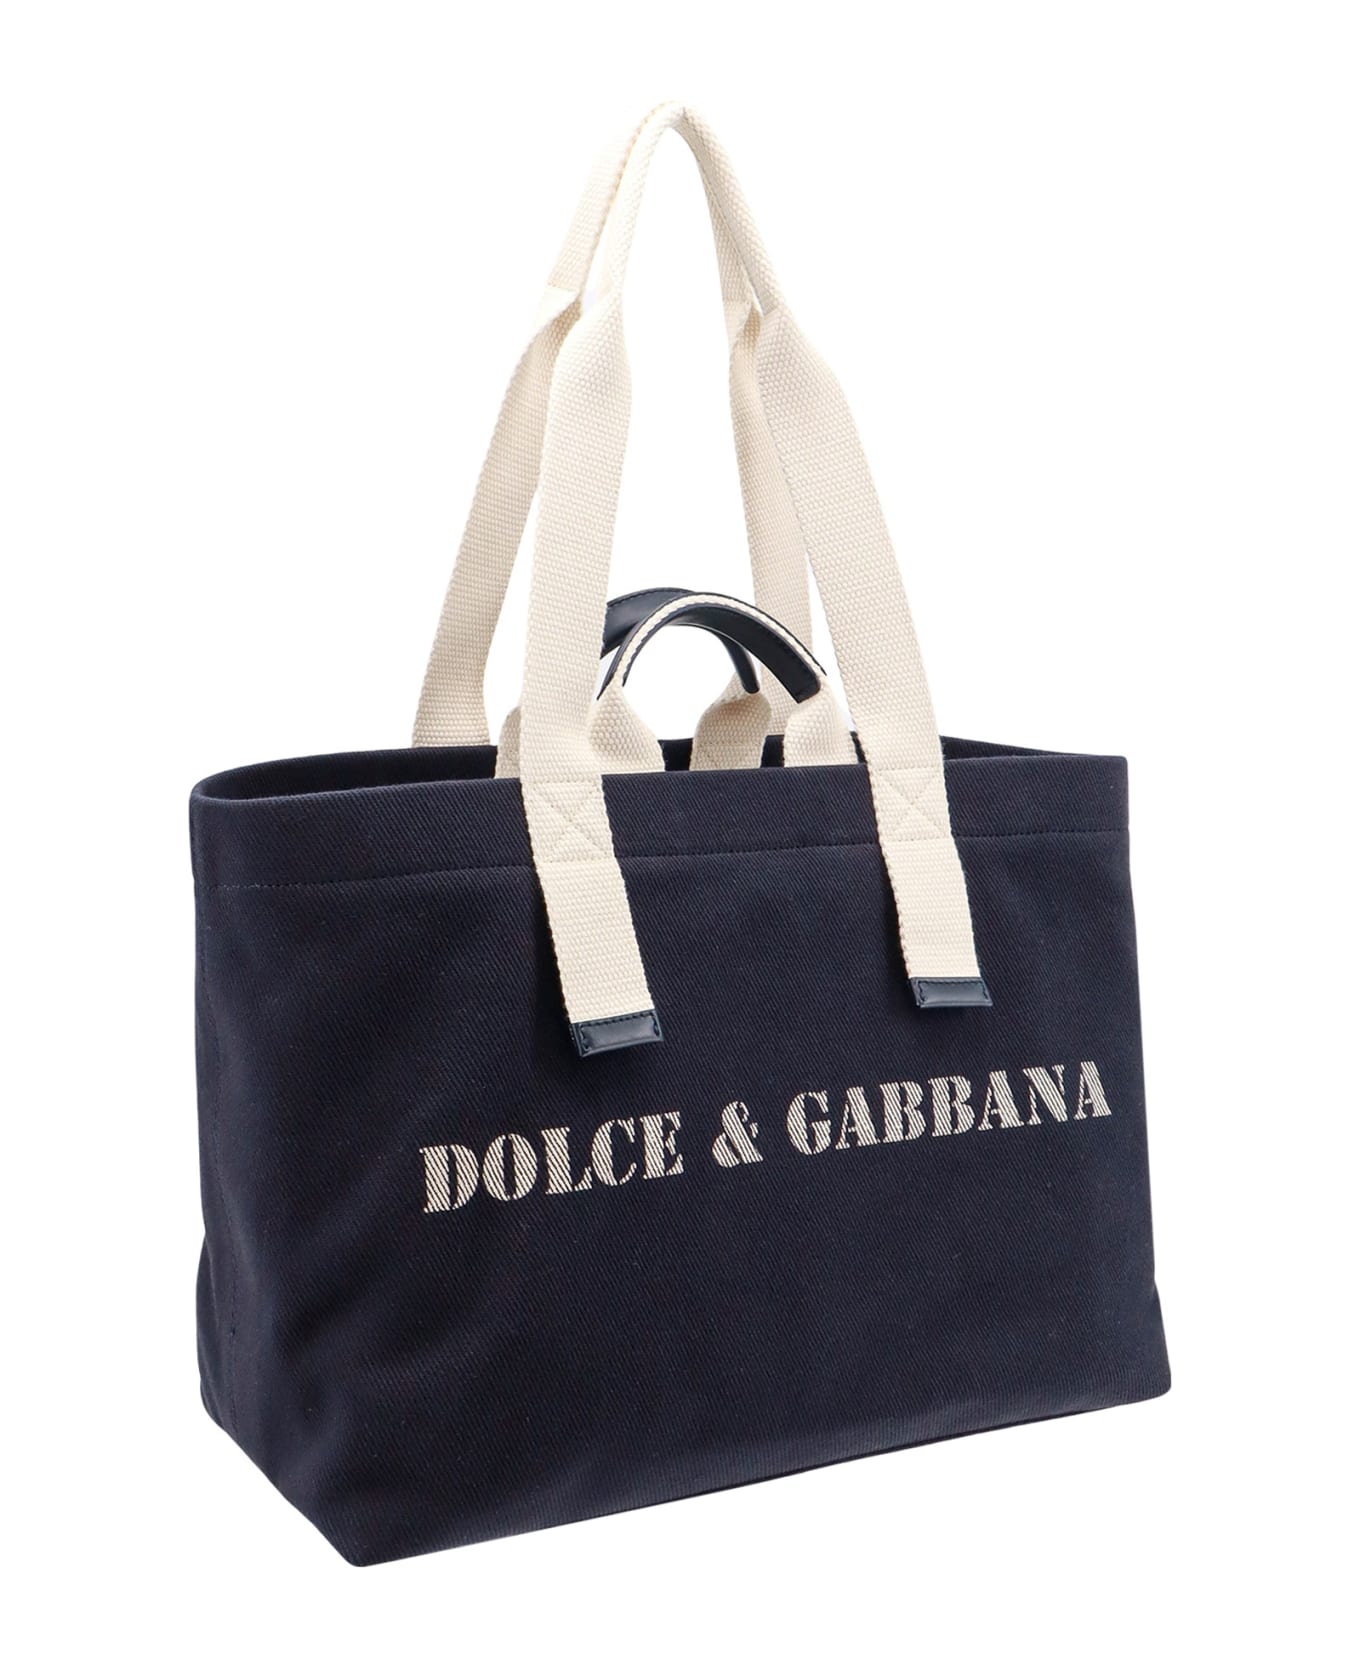 Dolce & Gabbana Shopping Bag With Logo - Blue